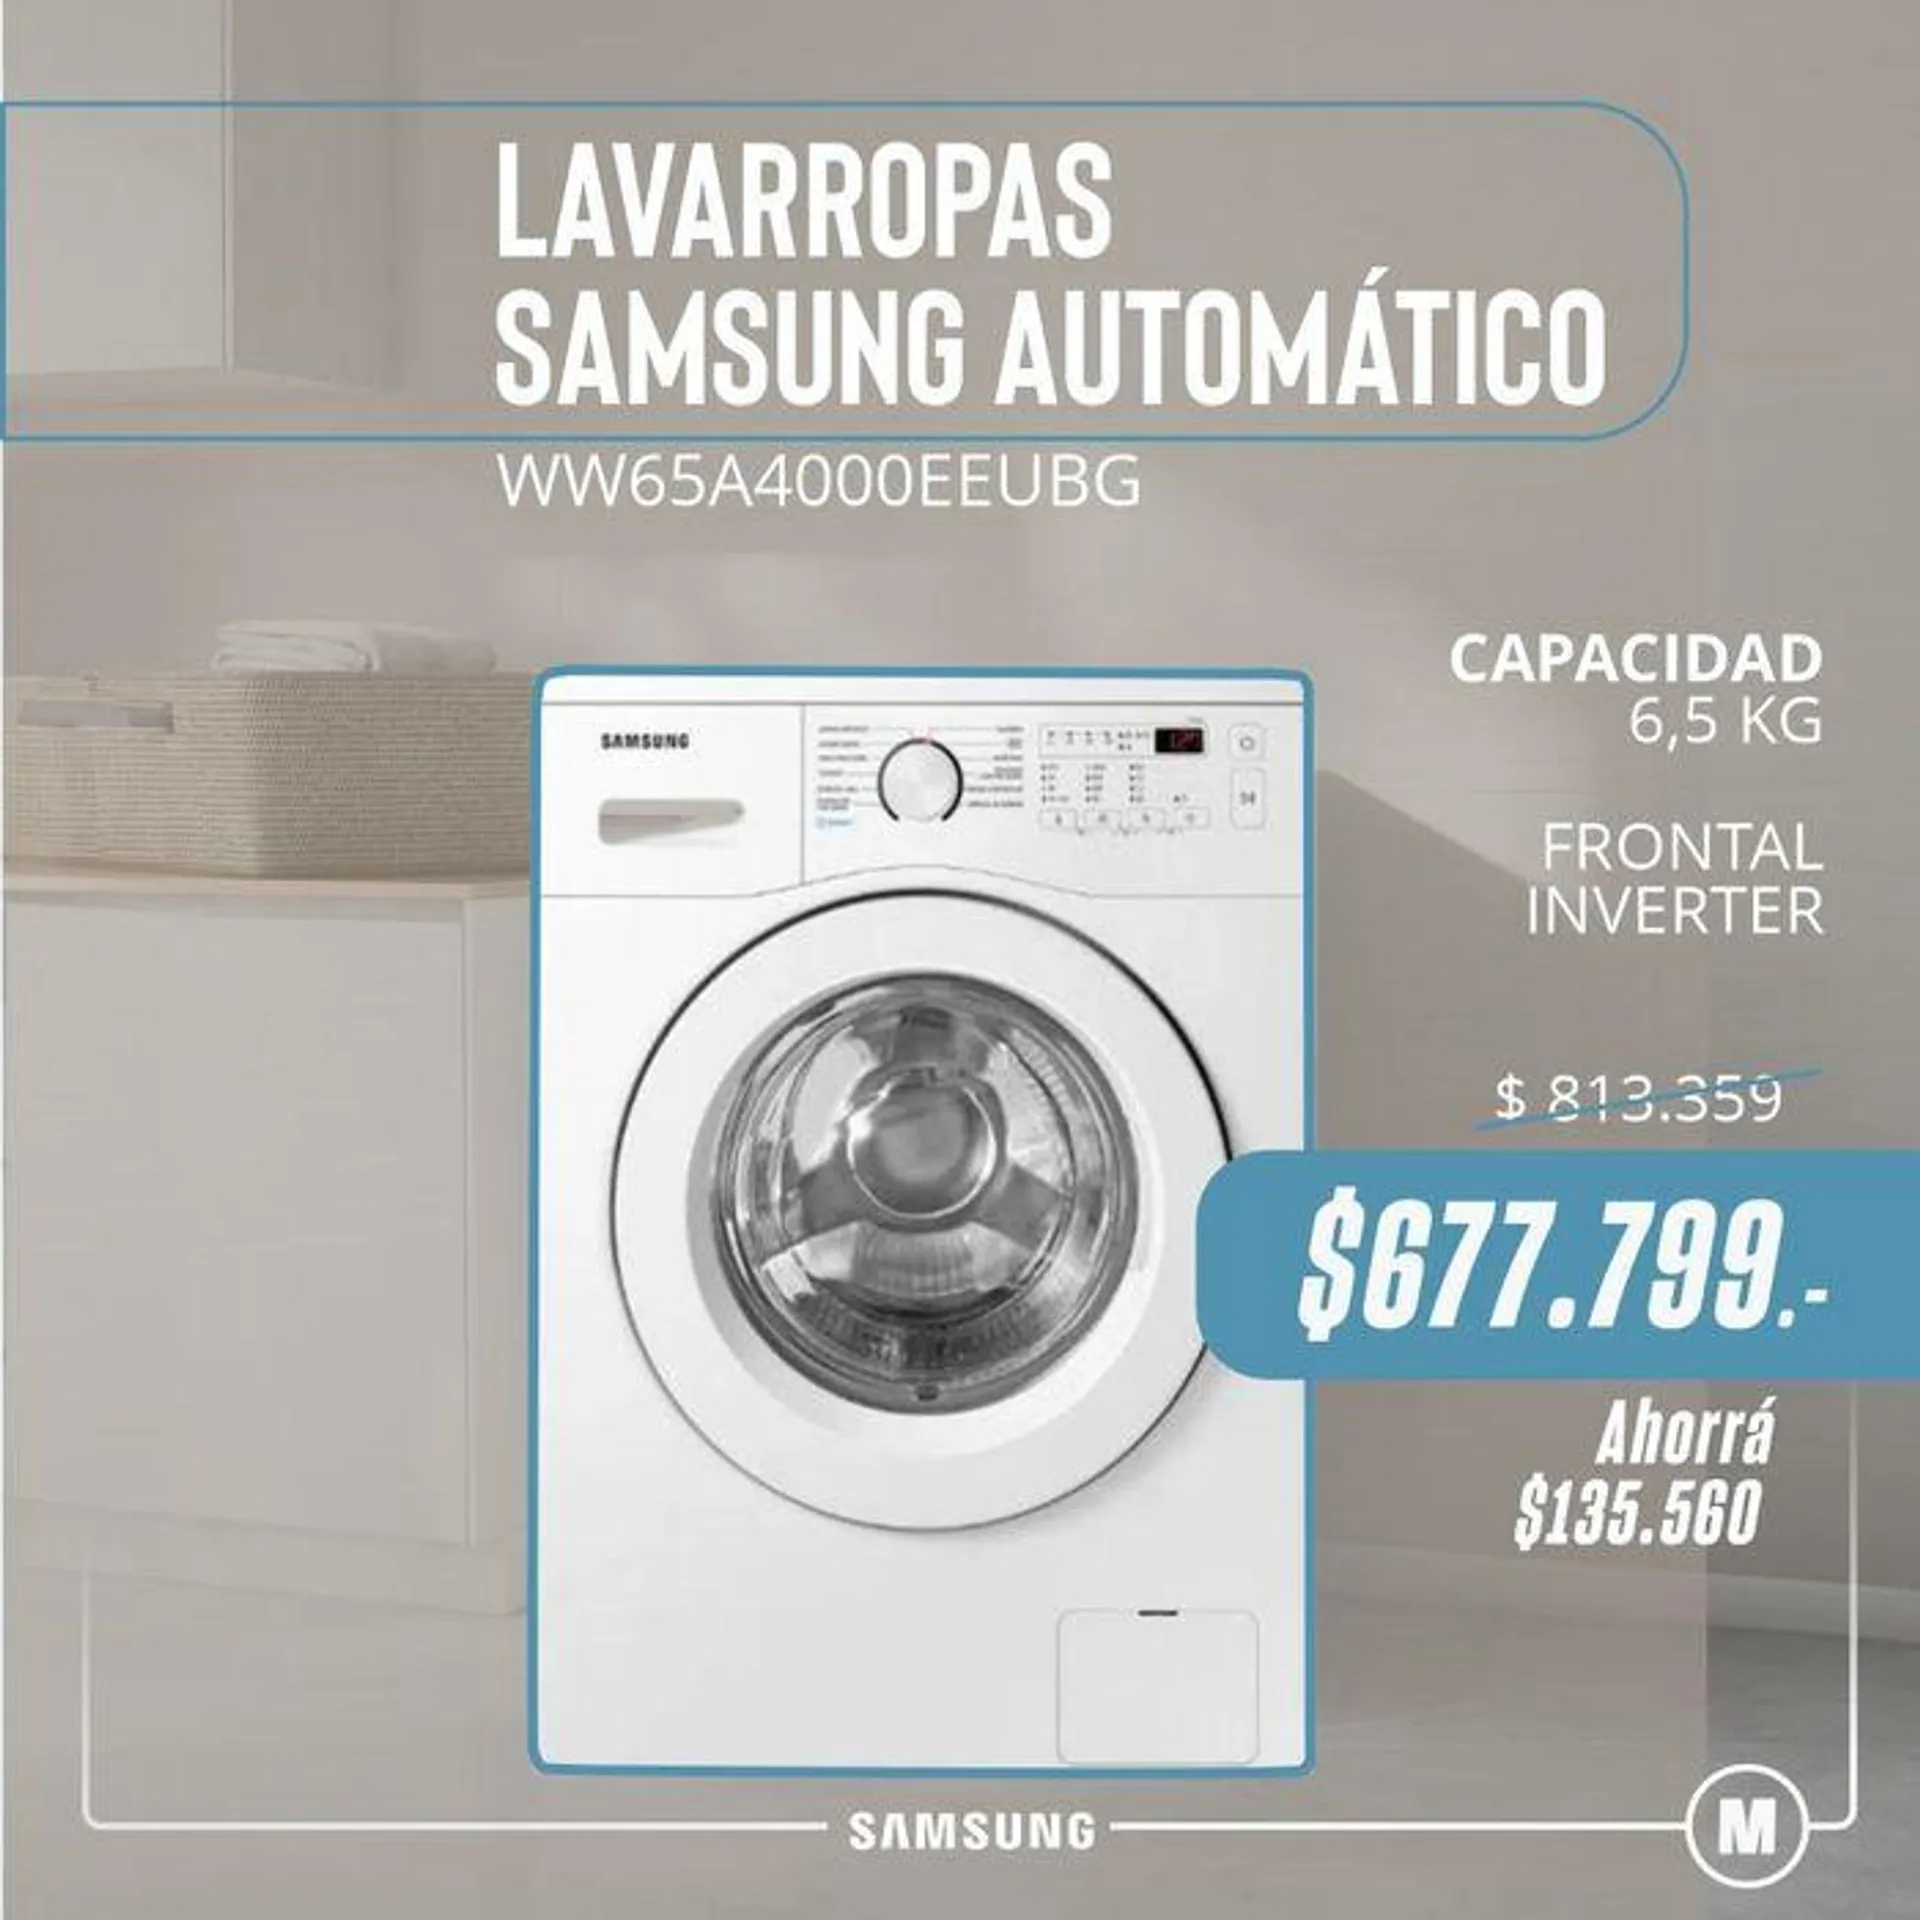 Ofertas en Lavarropas Samsung - 1